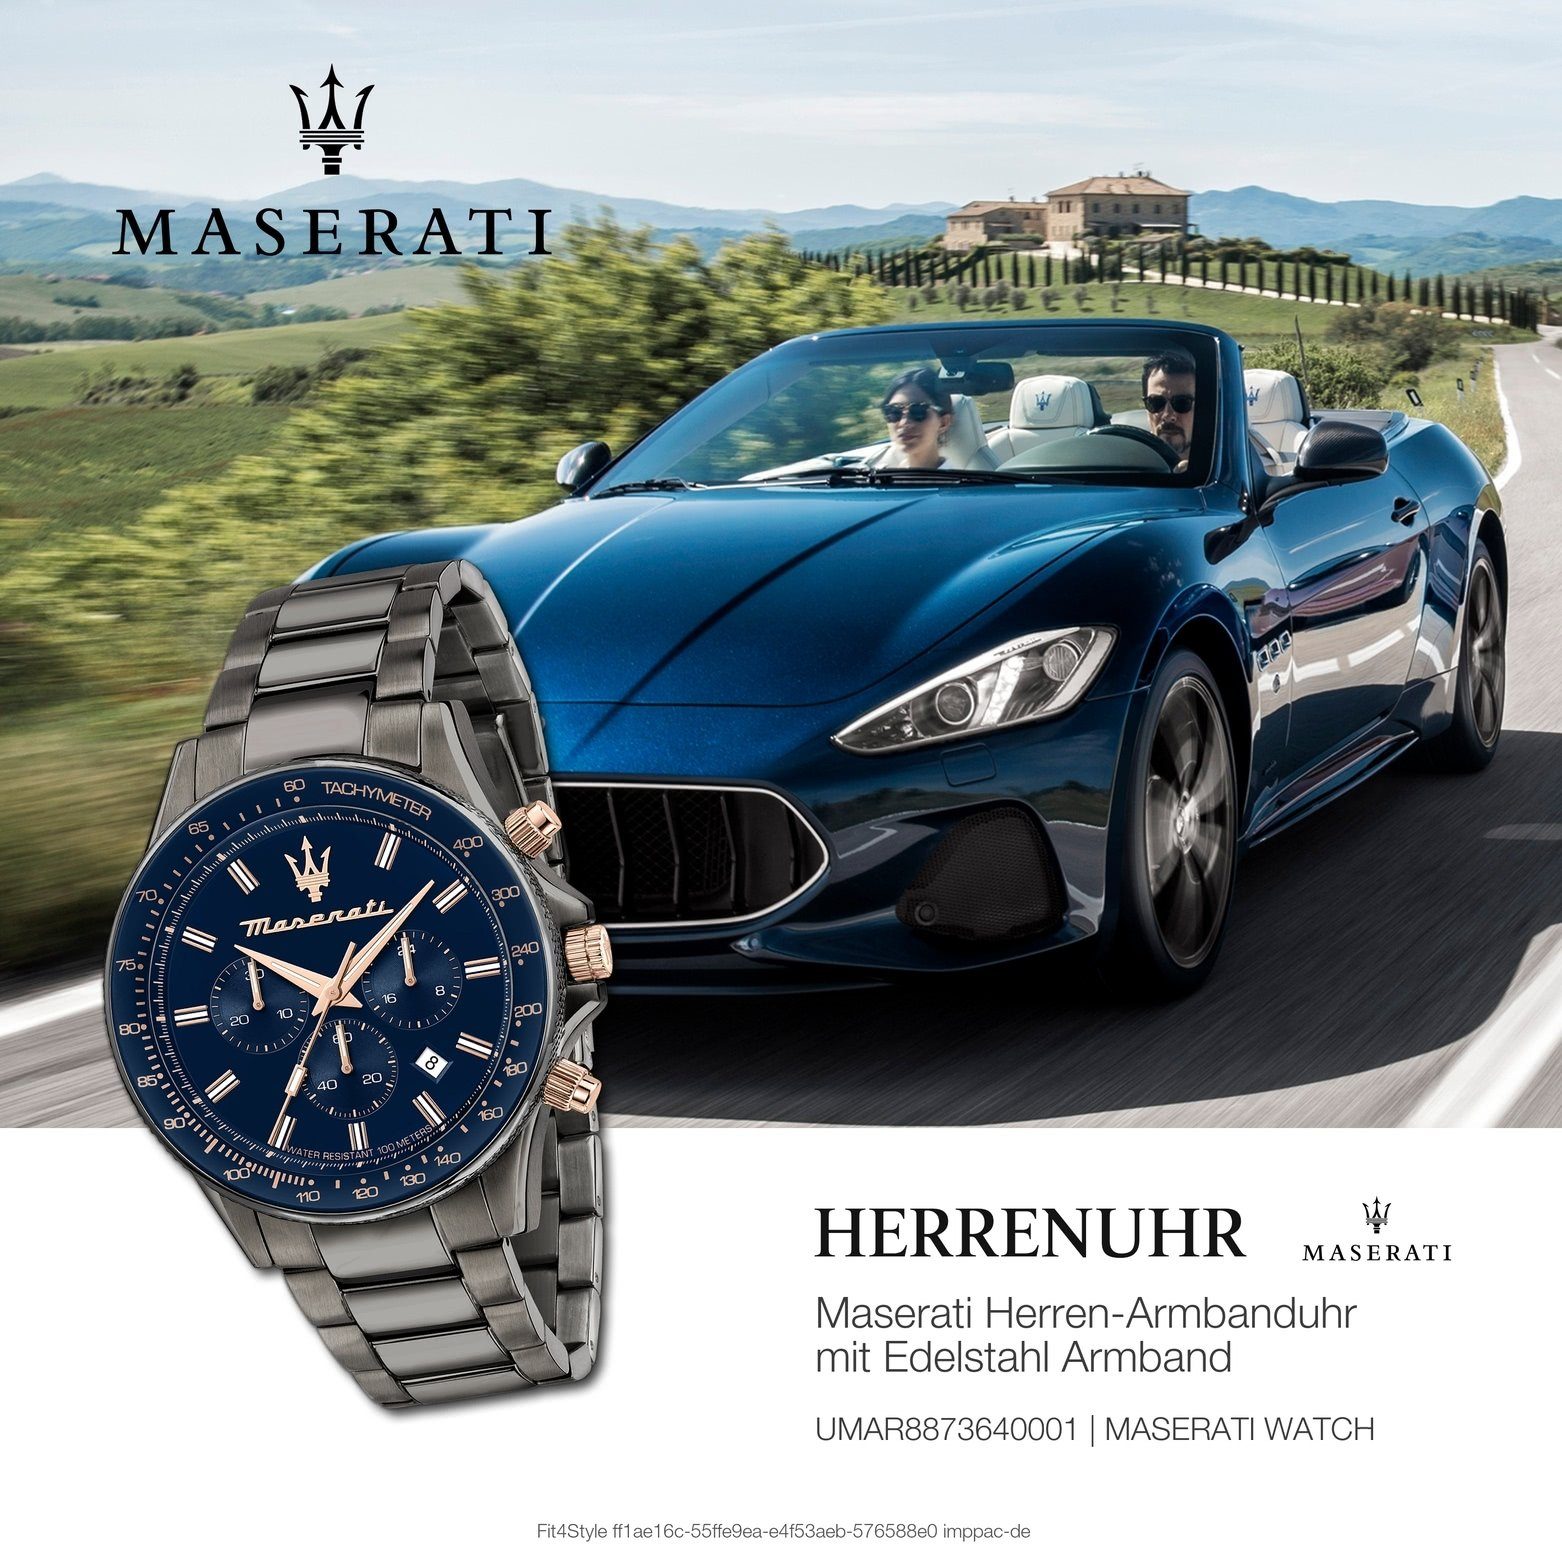 MASERATI Herren rund, Made-In (ca. Chronograph grau Italy Edelstahlarmband, Herrenuhr Maserati Uhr 44mm) groß Chronograph,